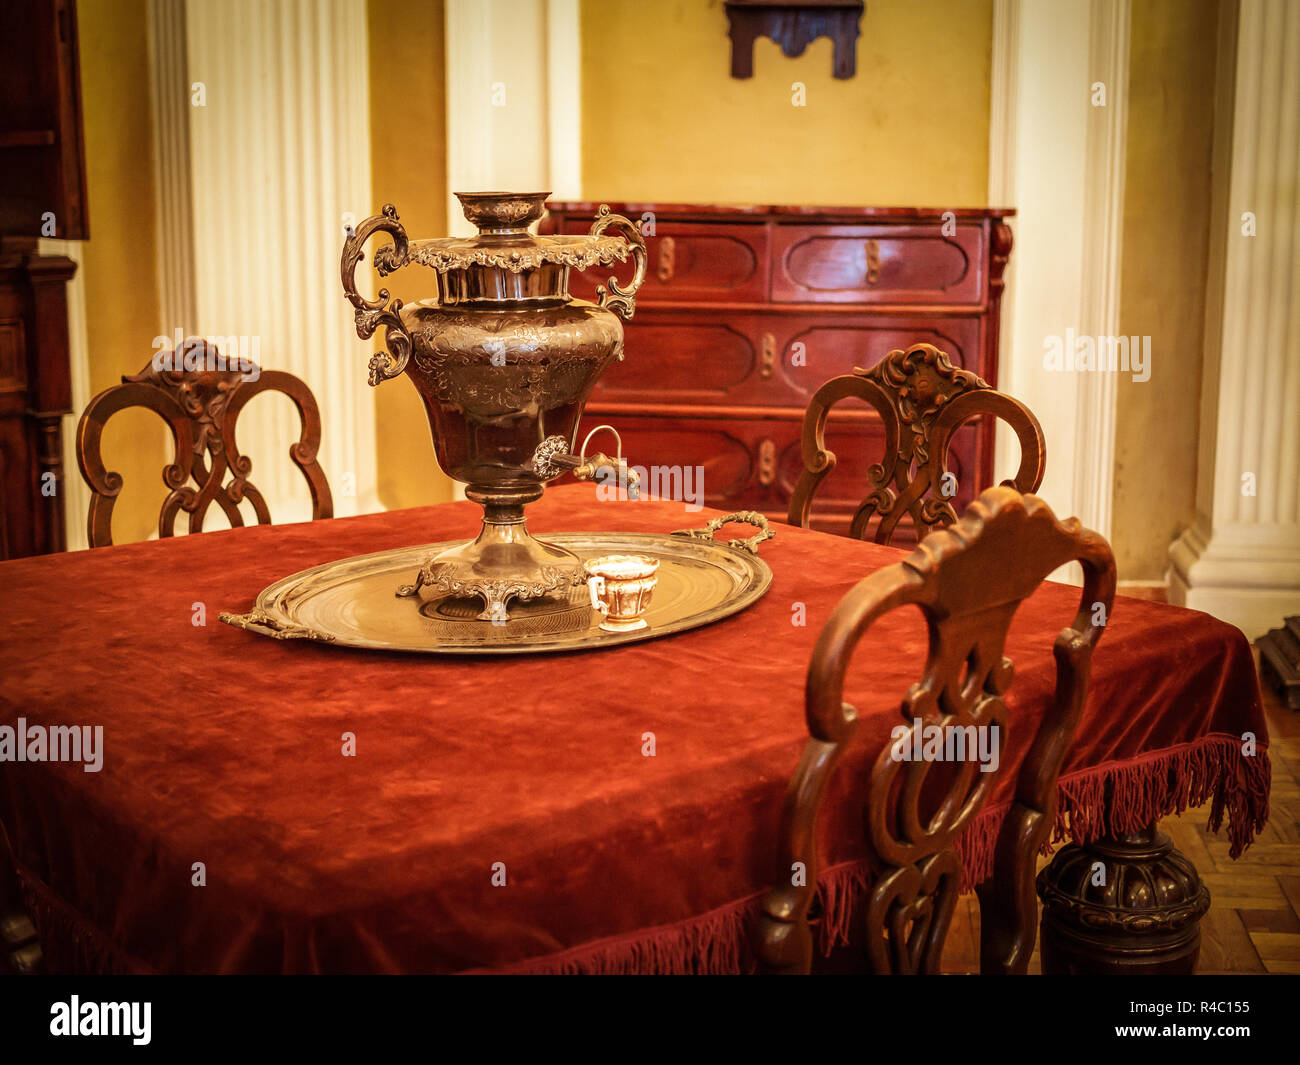 Samovar on the table in the vintage victorian era interior Stock Photo